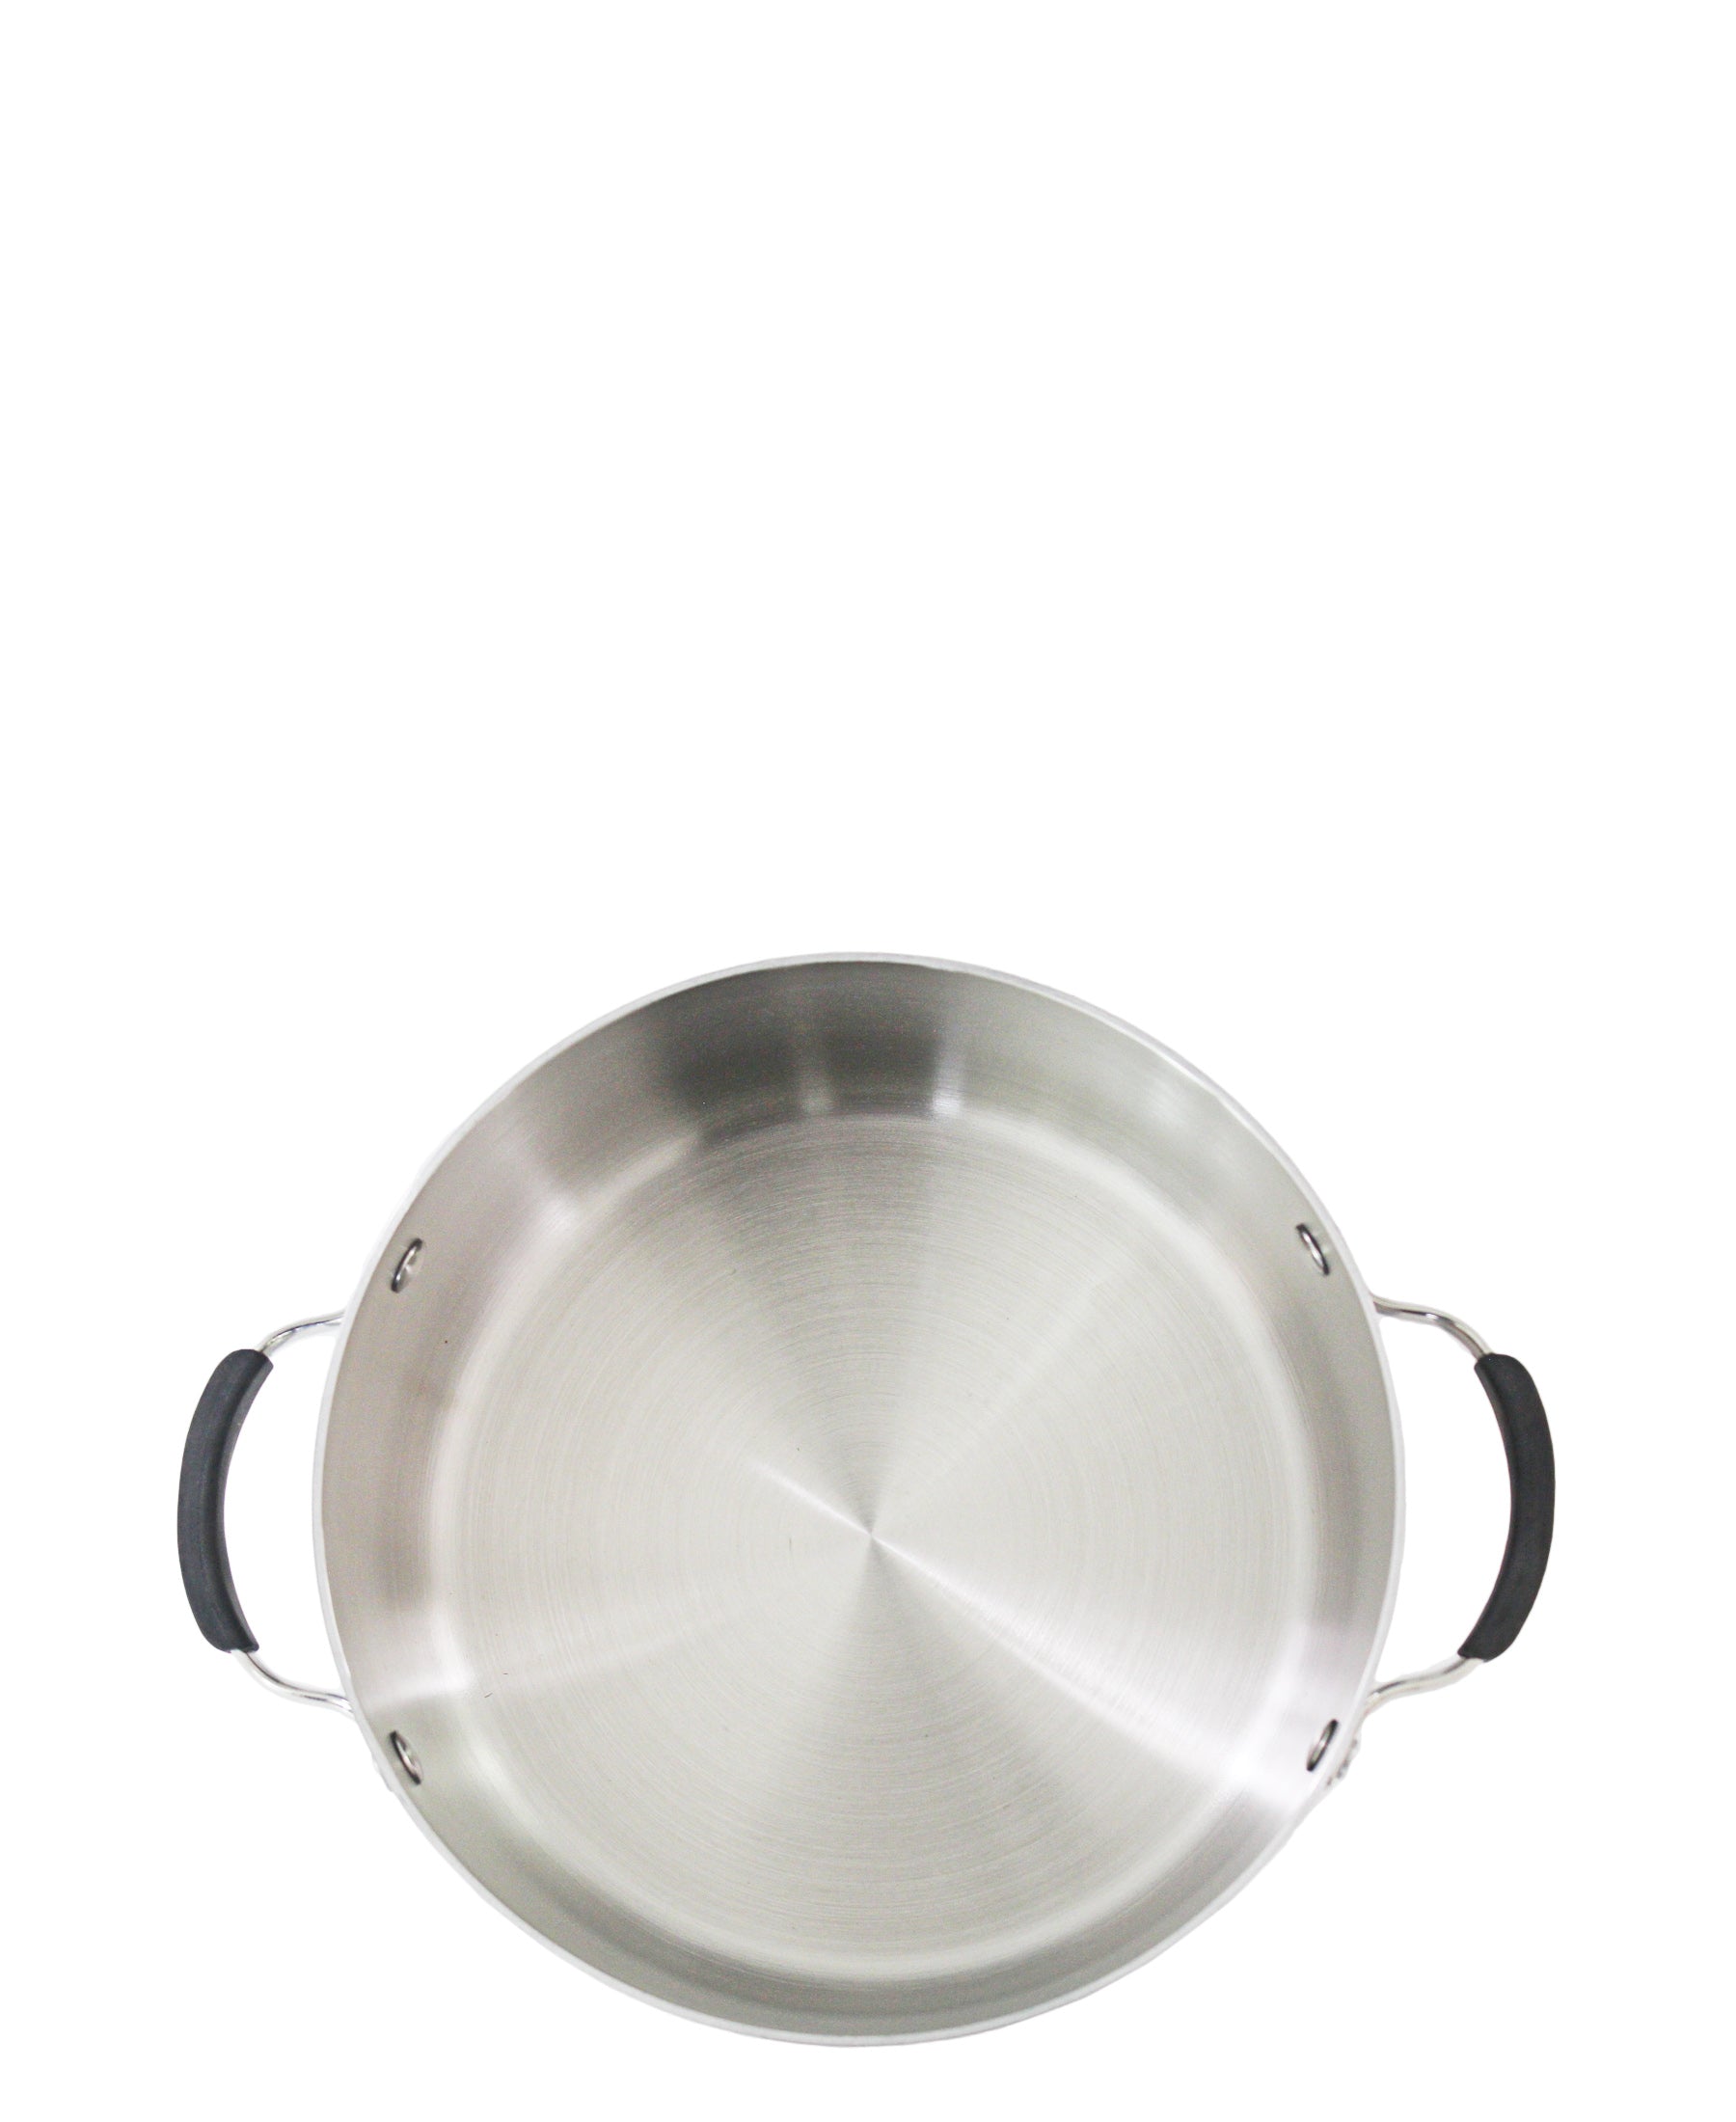 Progressive Covered Pot 5.7LT - Silver